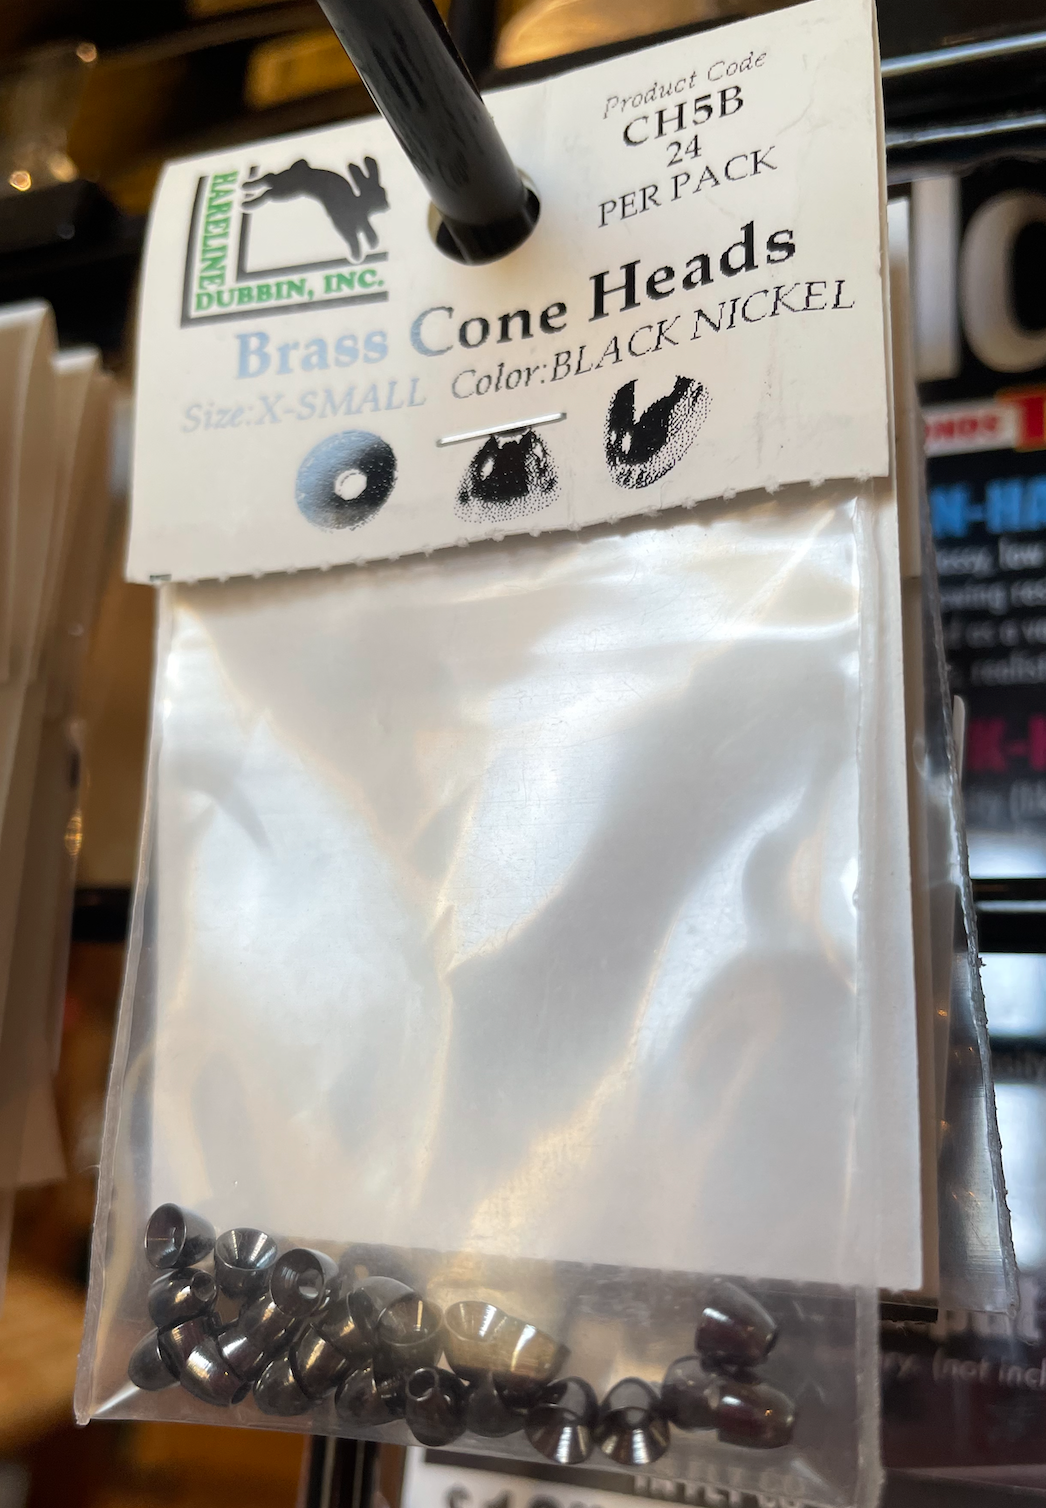 Brass Cone Heads